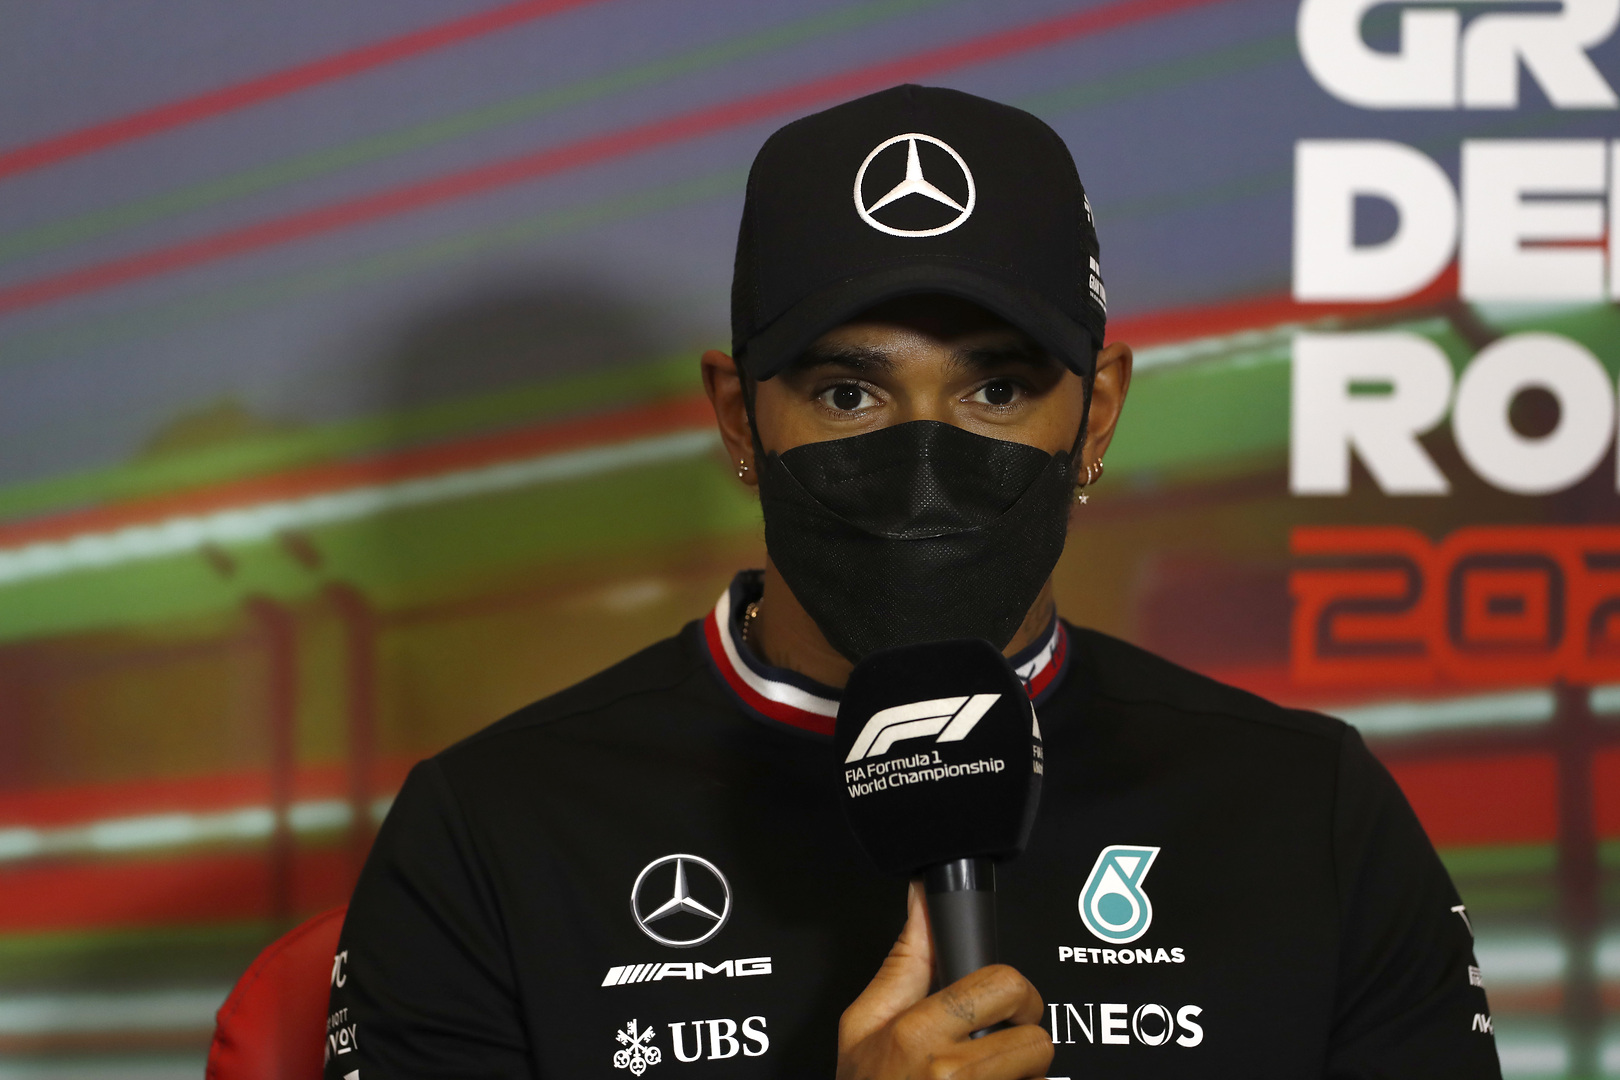 F1 - Hamilton veut rester positif malgré les difficultés de Mercedes